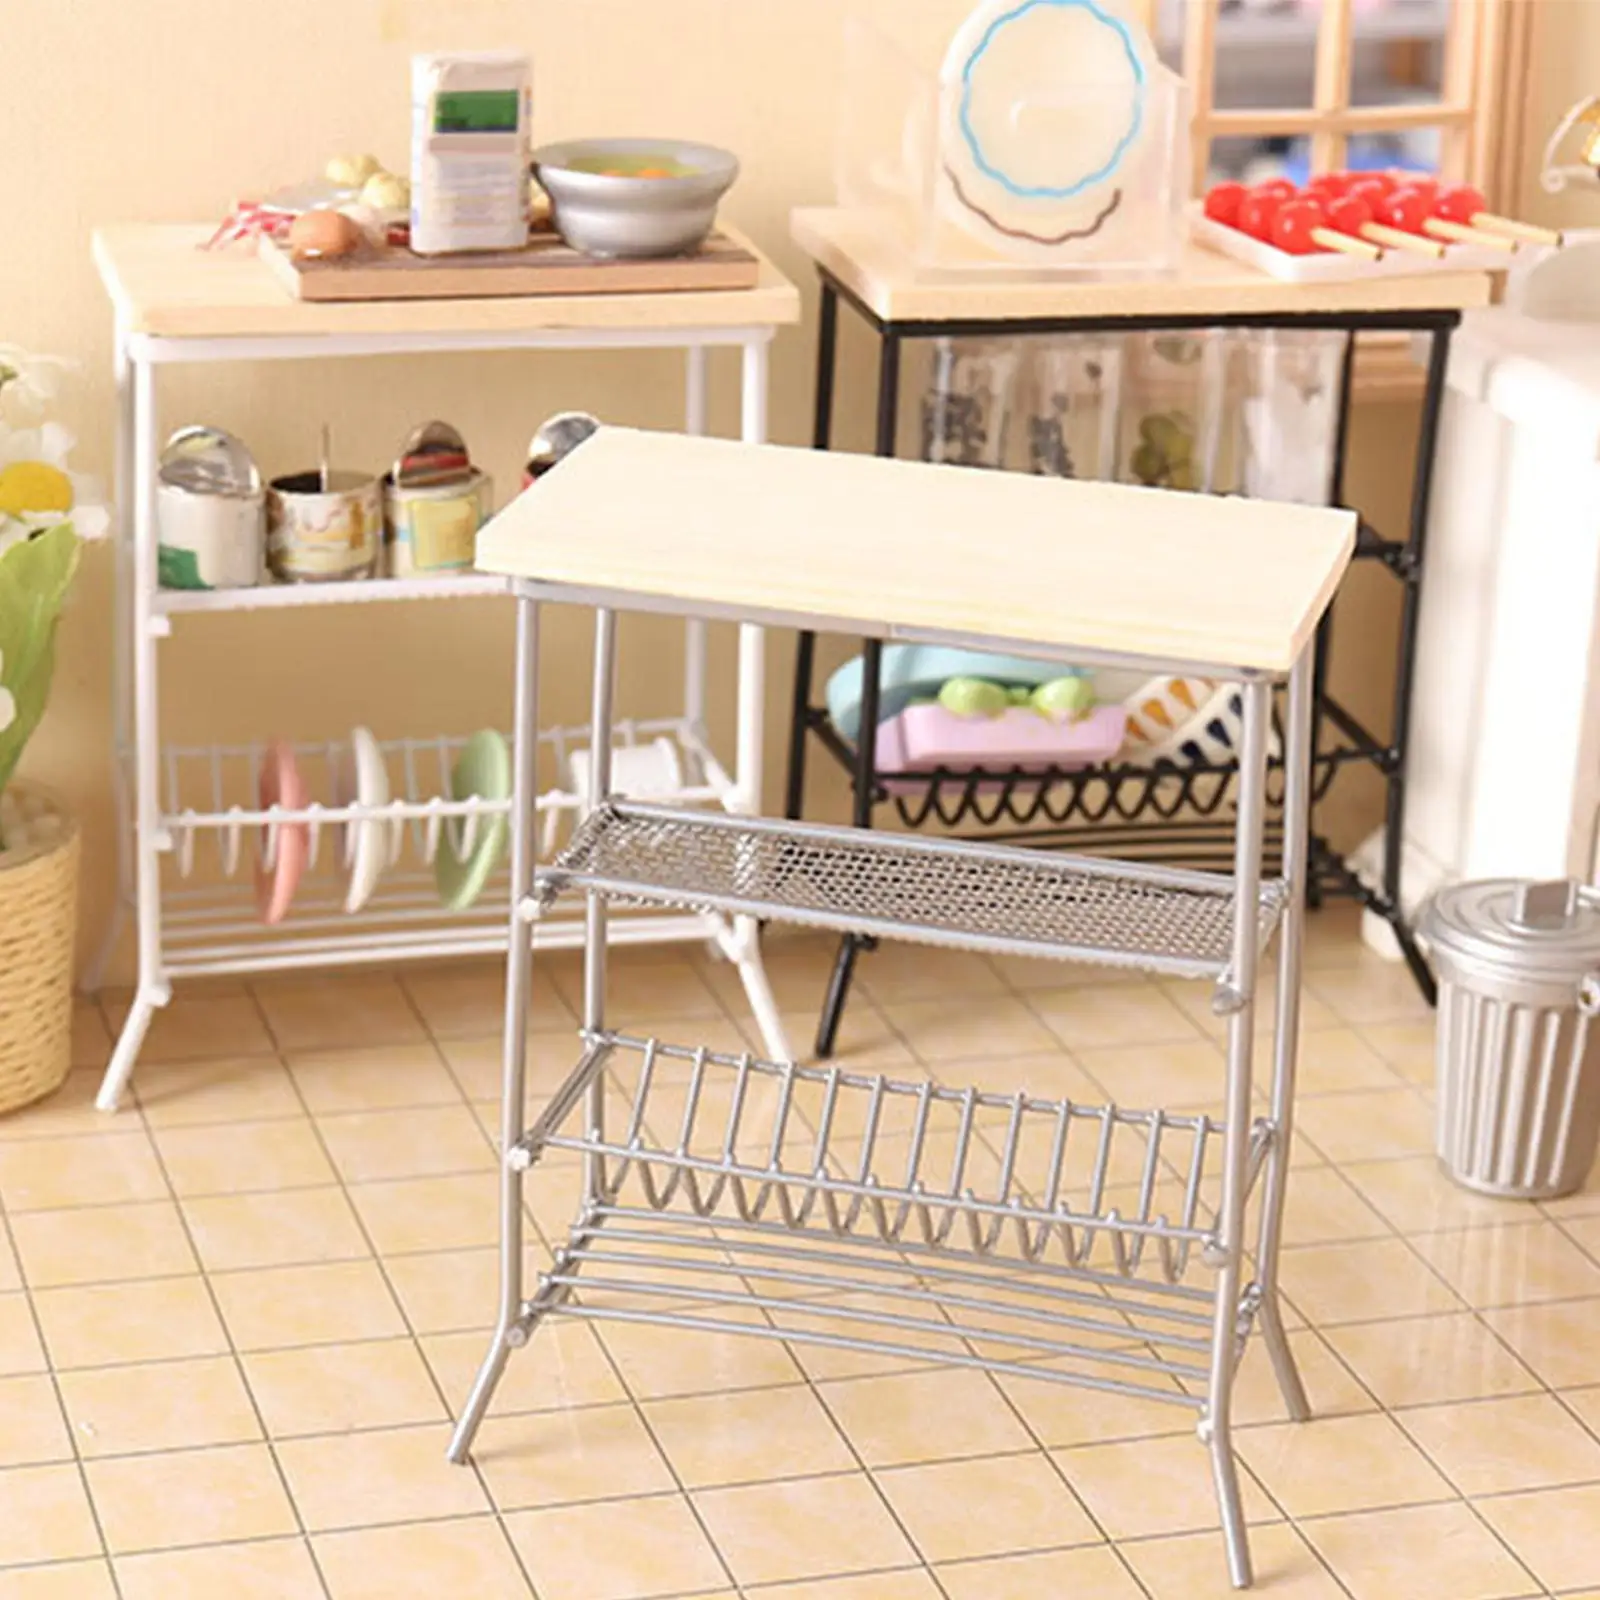 1/12 Mini Dish Rack Dollhouse Furniture Accessories Dish Rack Landscape Supplies